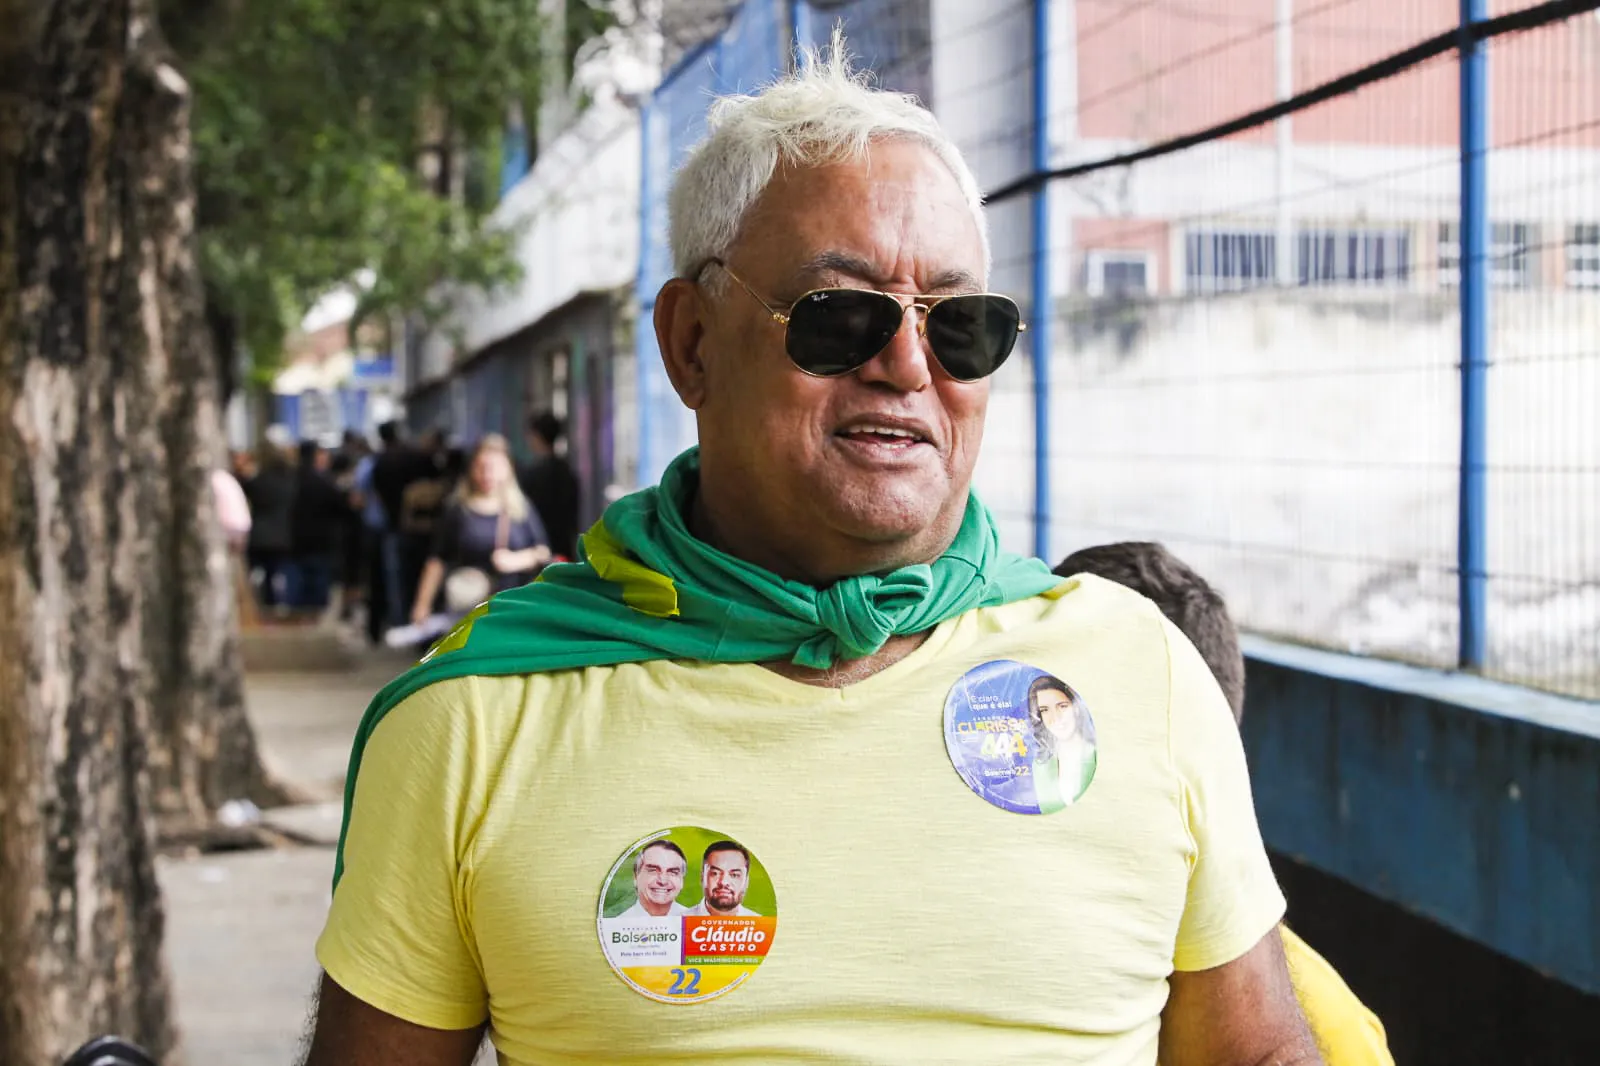 José Maria votou na Tijuca e falou sobre a importância do voto